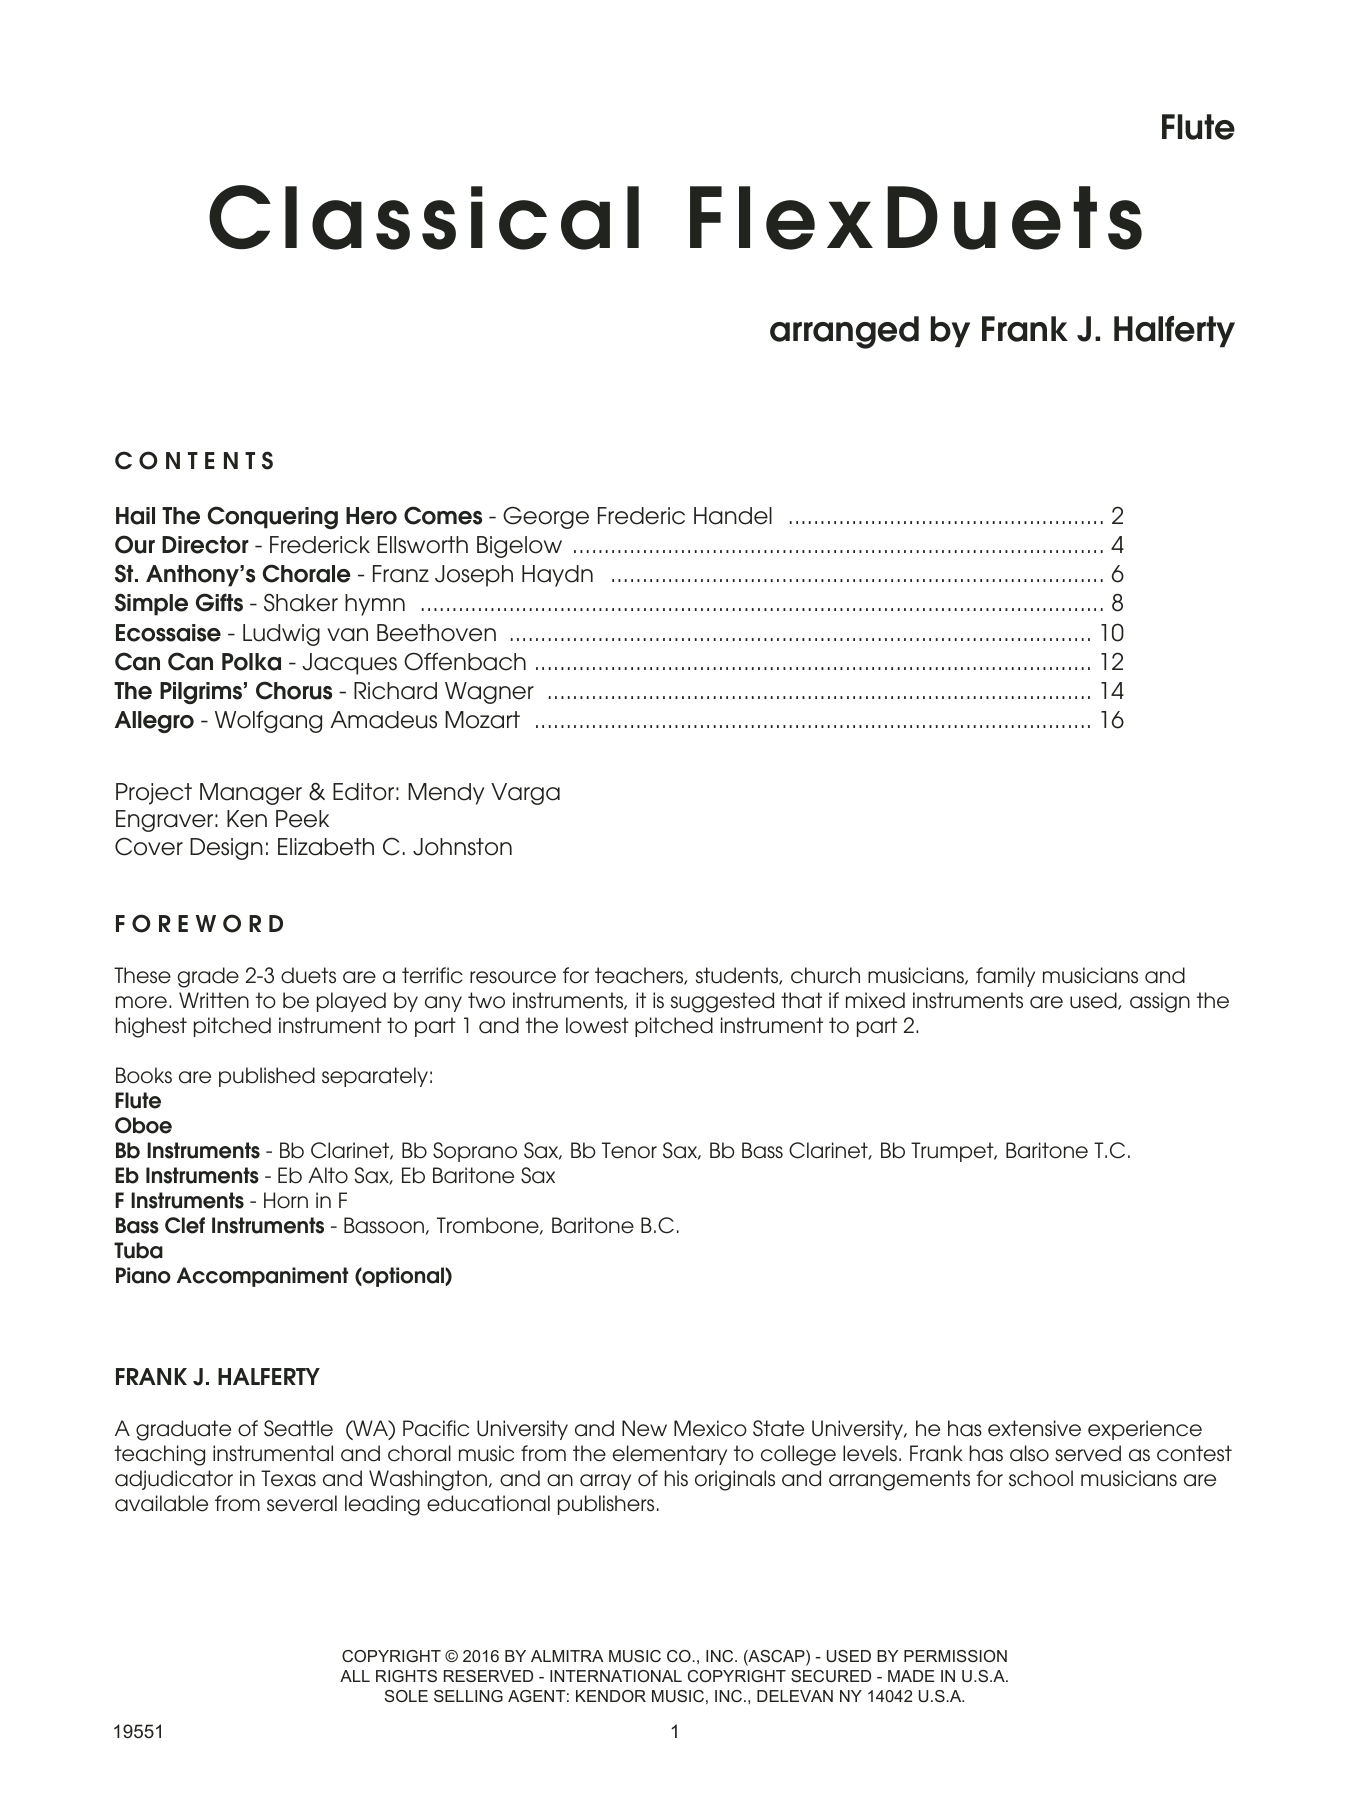 Download Frank J. Halferty Classical FlexDuets - Flute Sheet Music